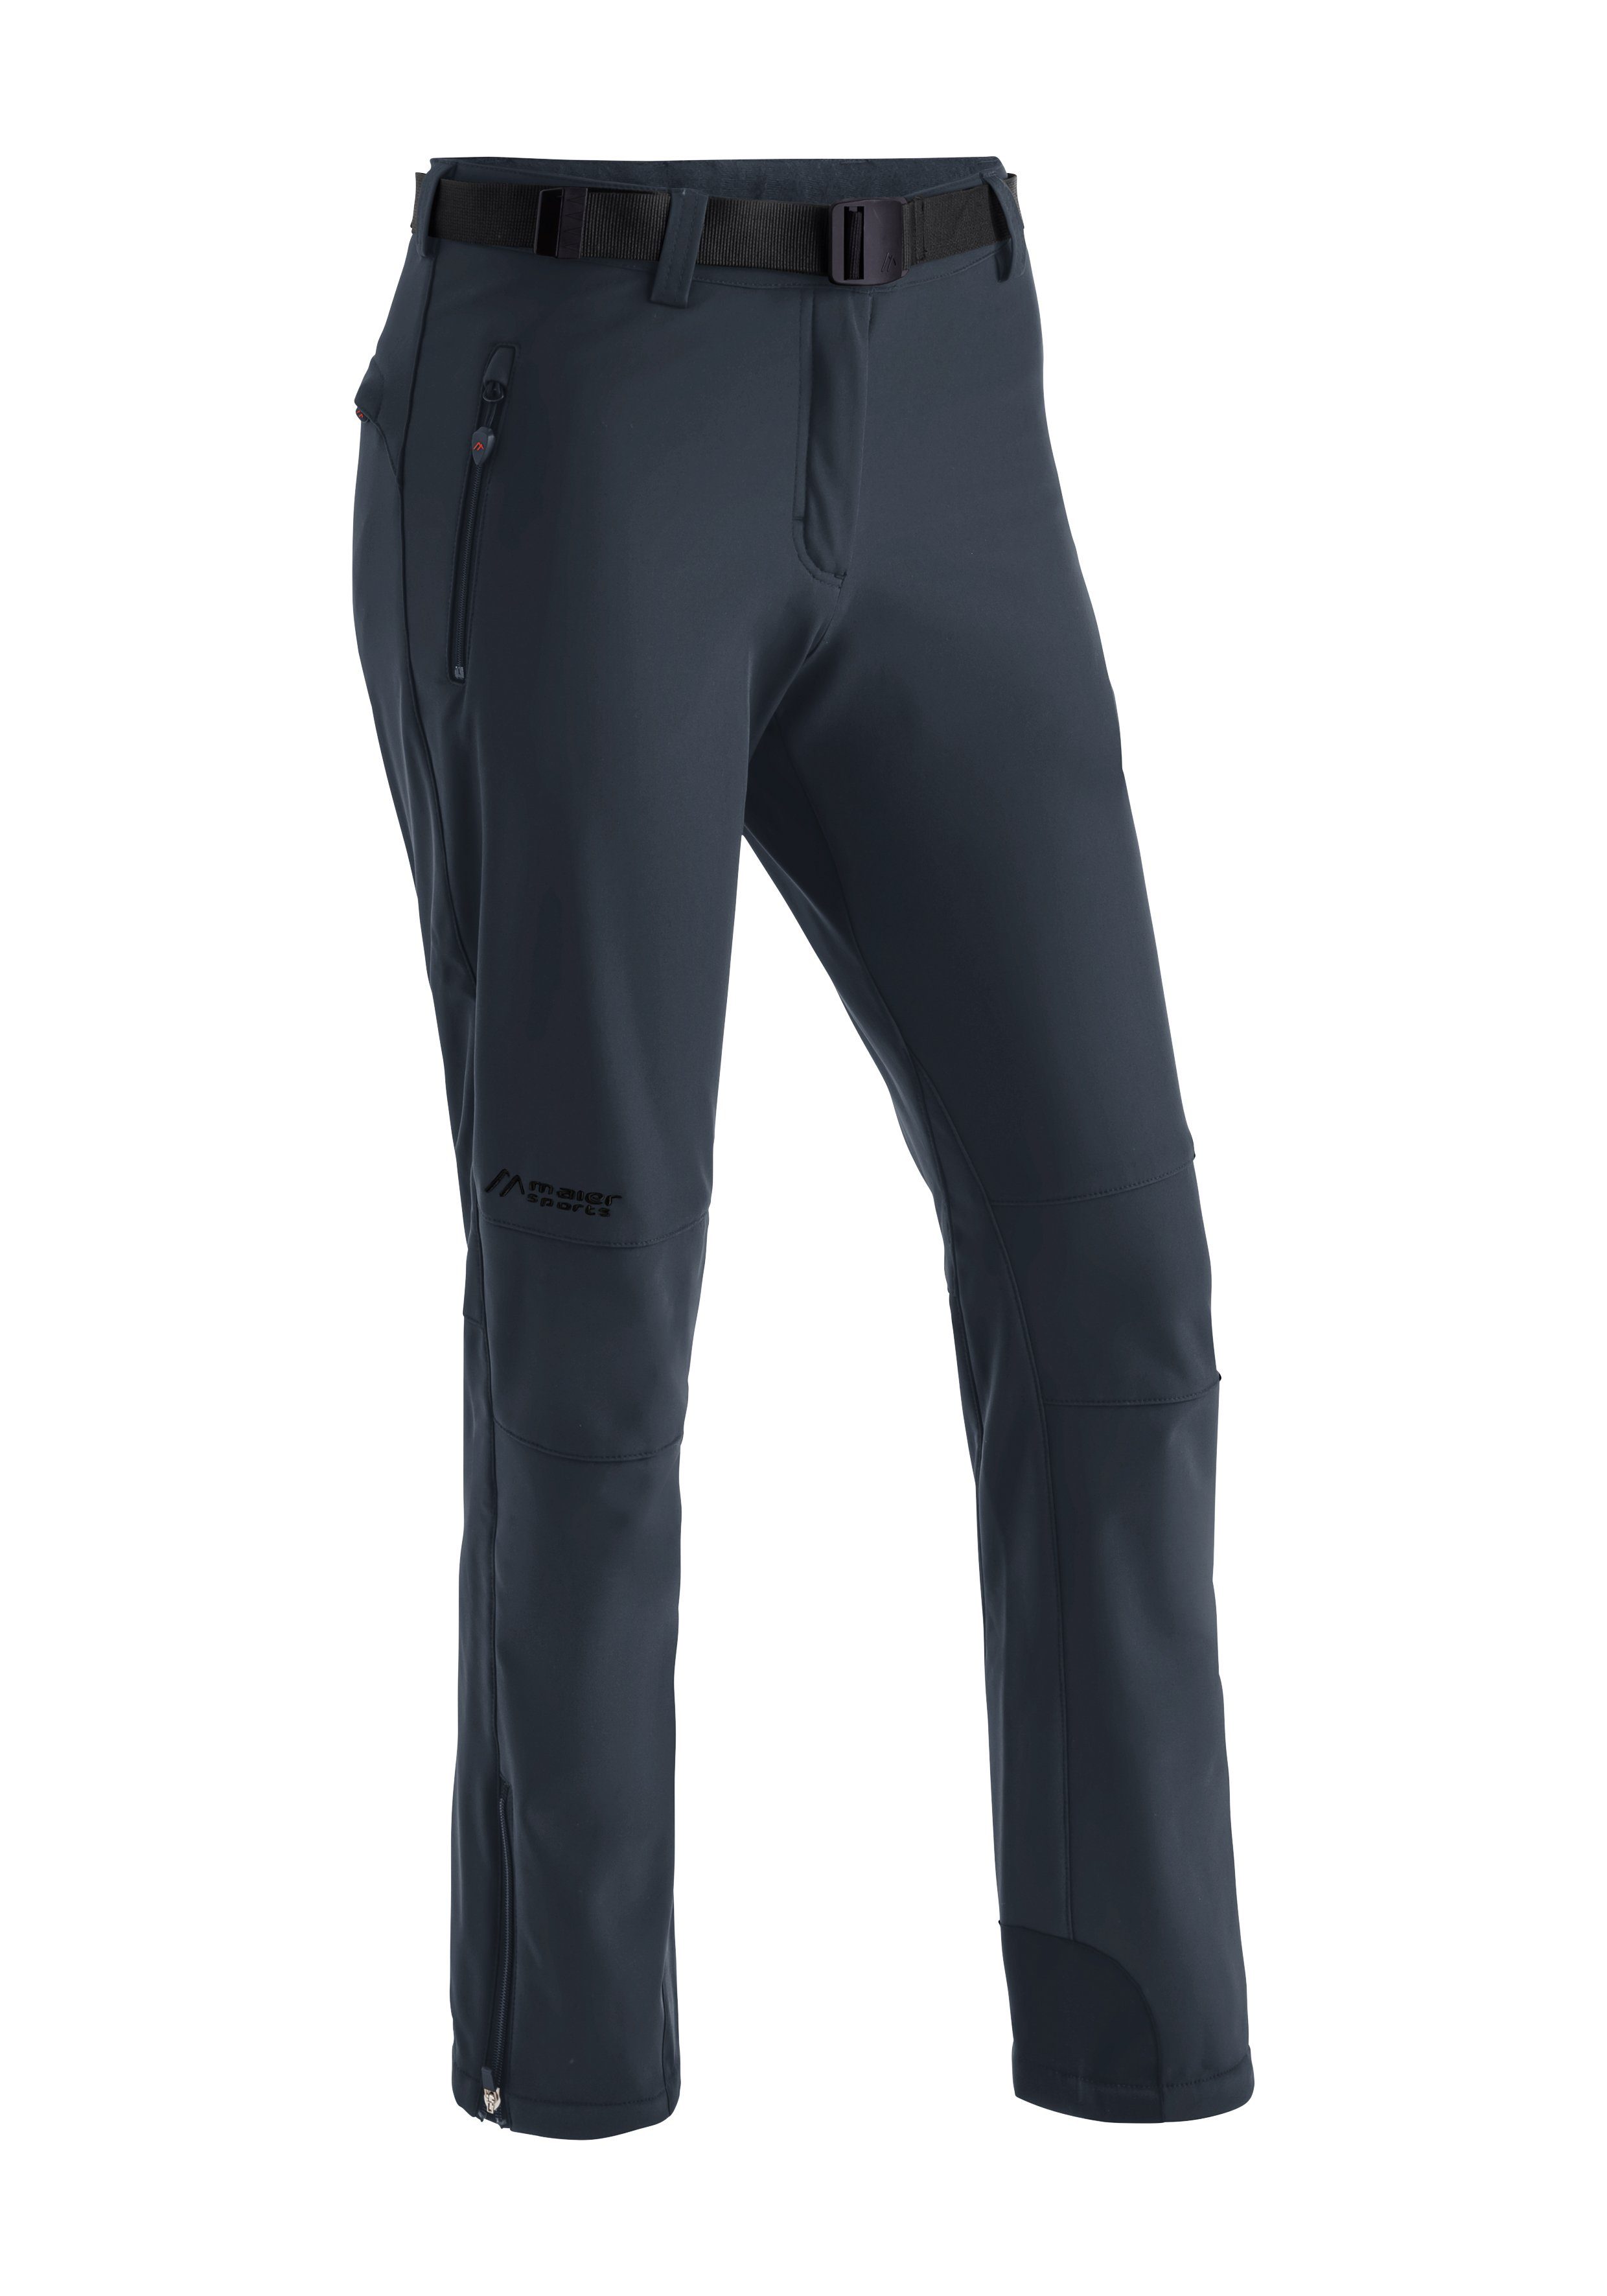 Maier Sports Funktionshose Tech Pants W Warme Softshellhose, elastisch und winddicht grau